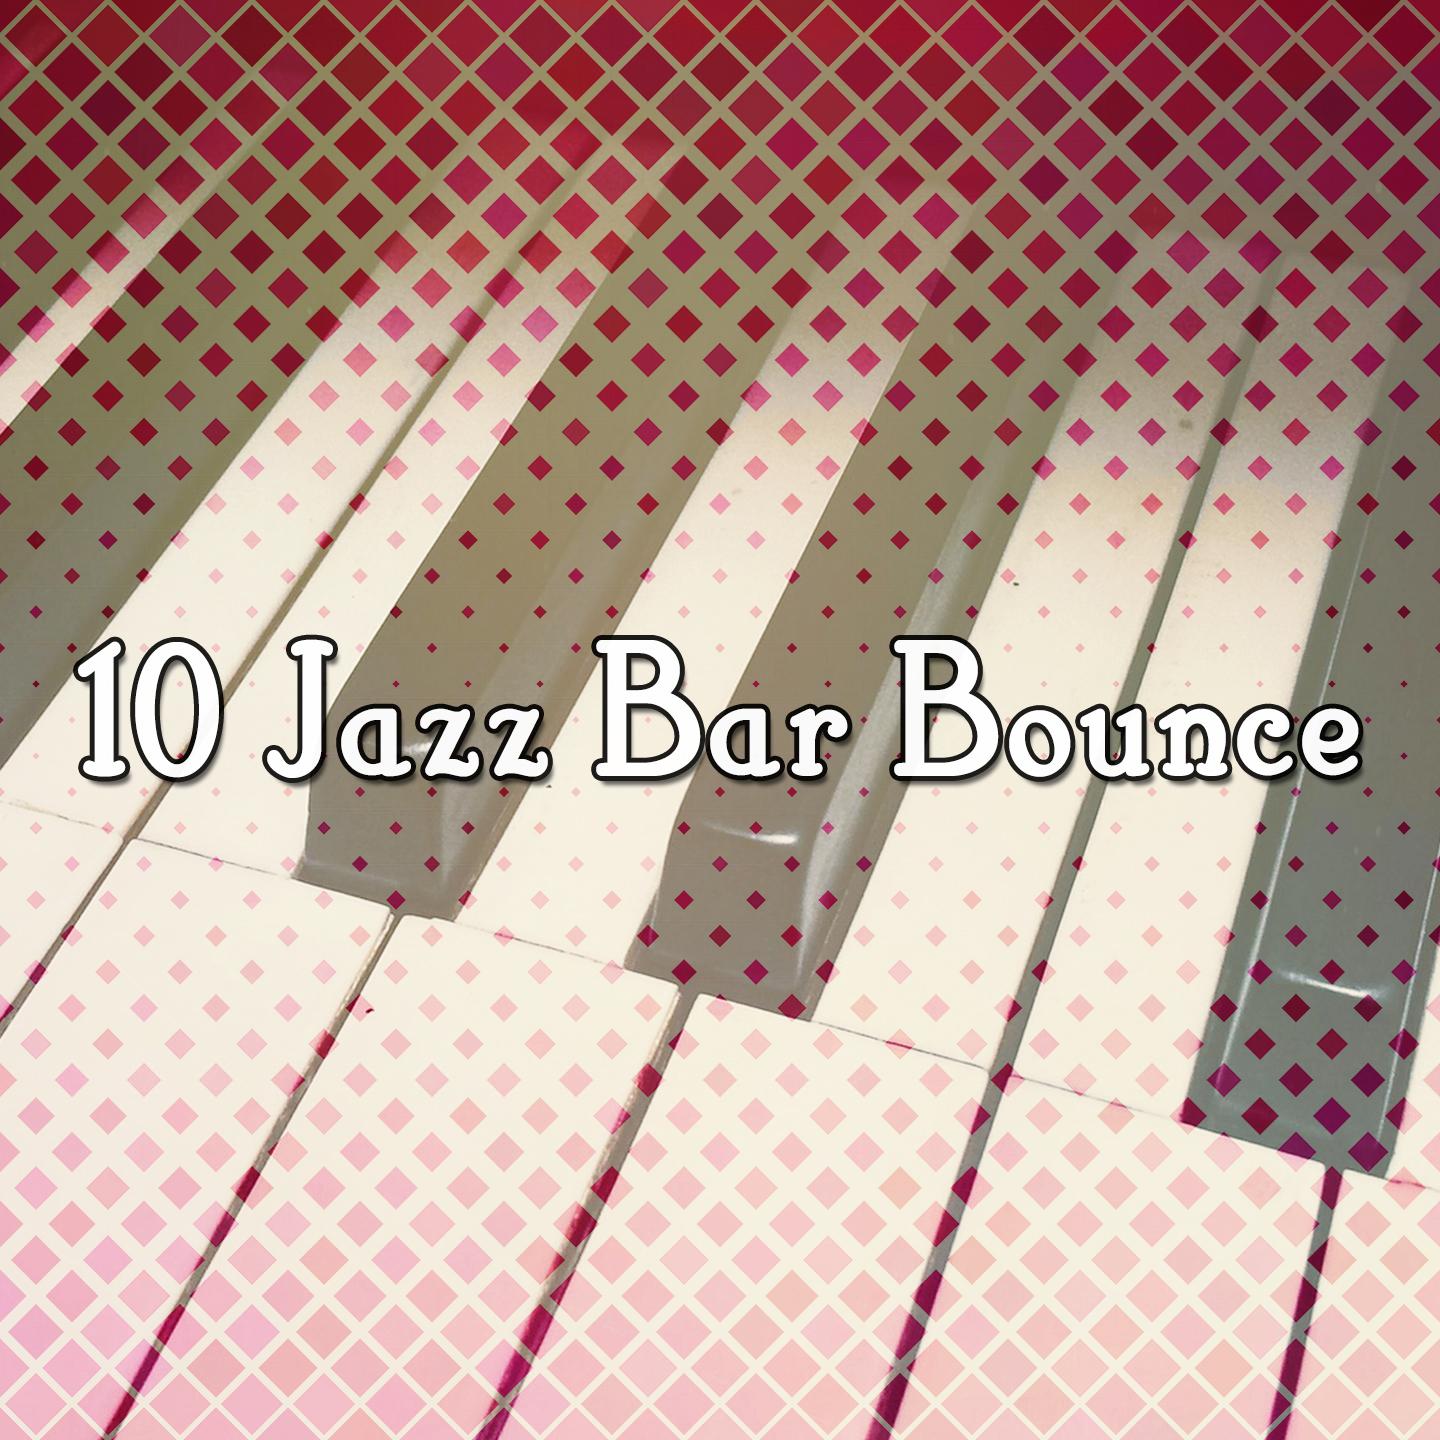 10 Jazz Bar Bounce